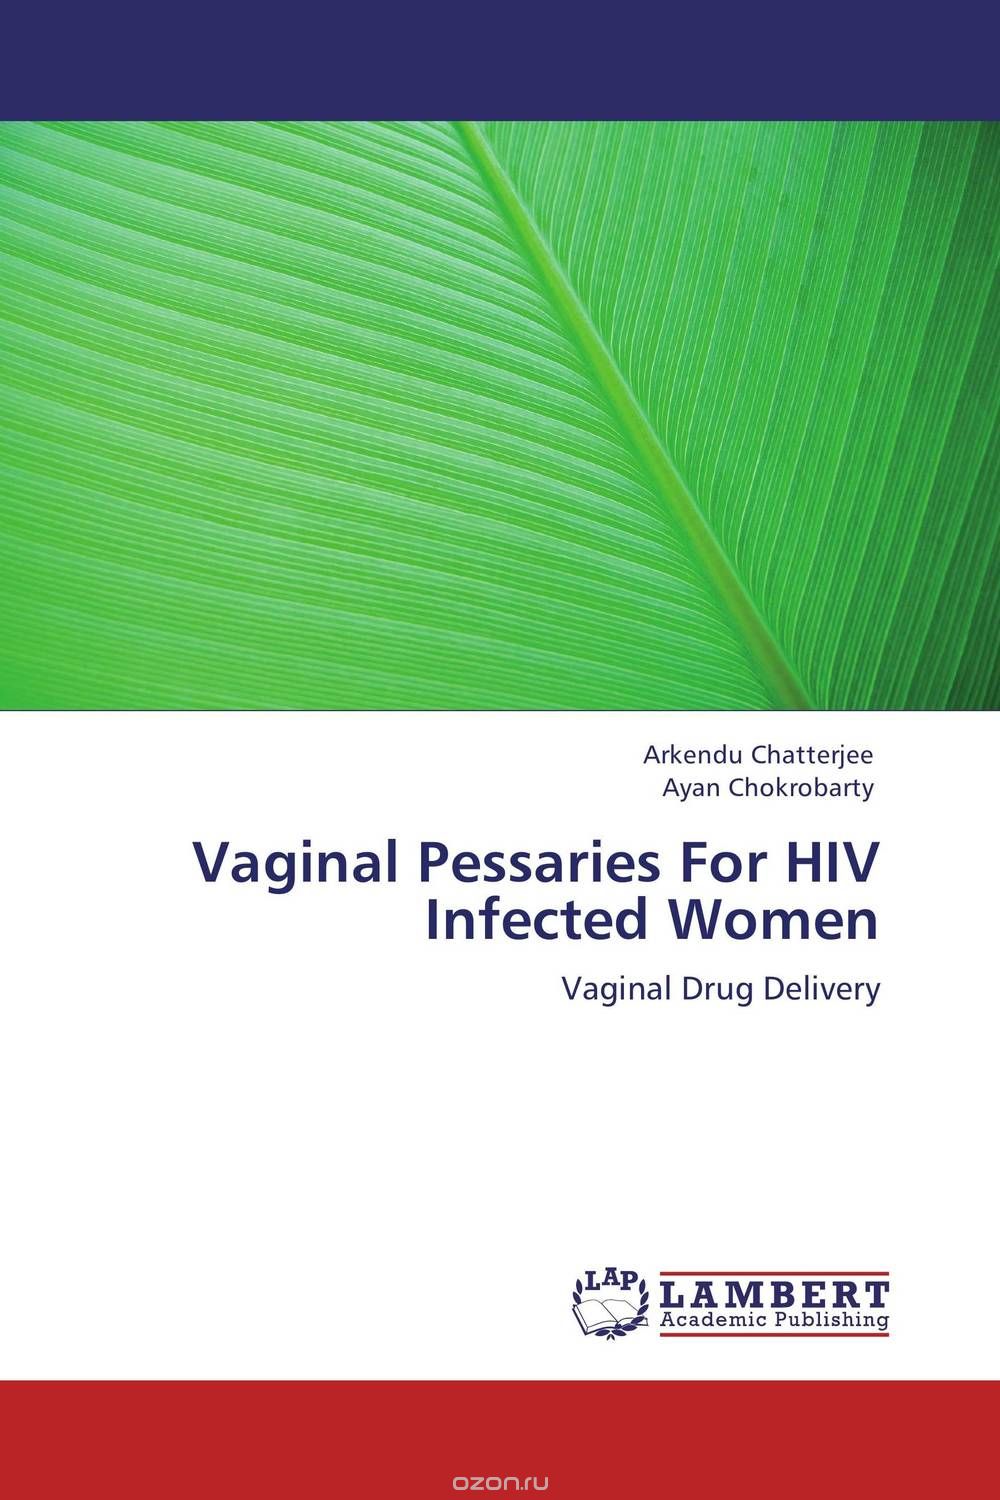 Скачать книгу "Vaginal Pessaries For HIV Infected Women"